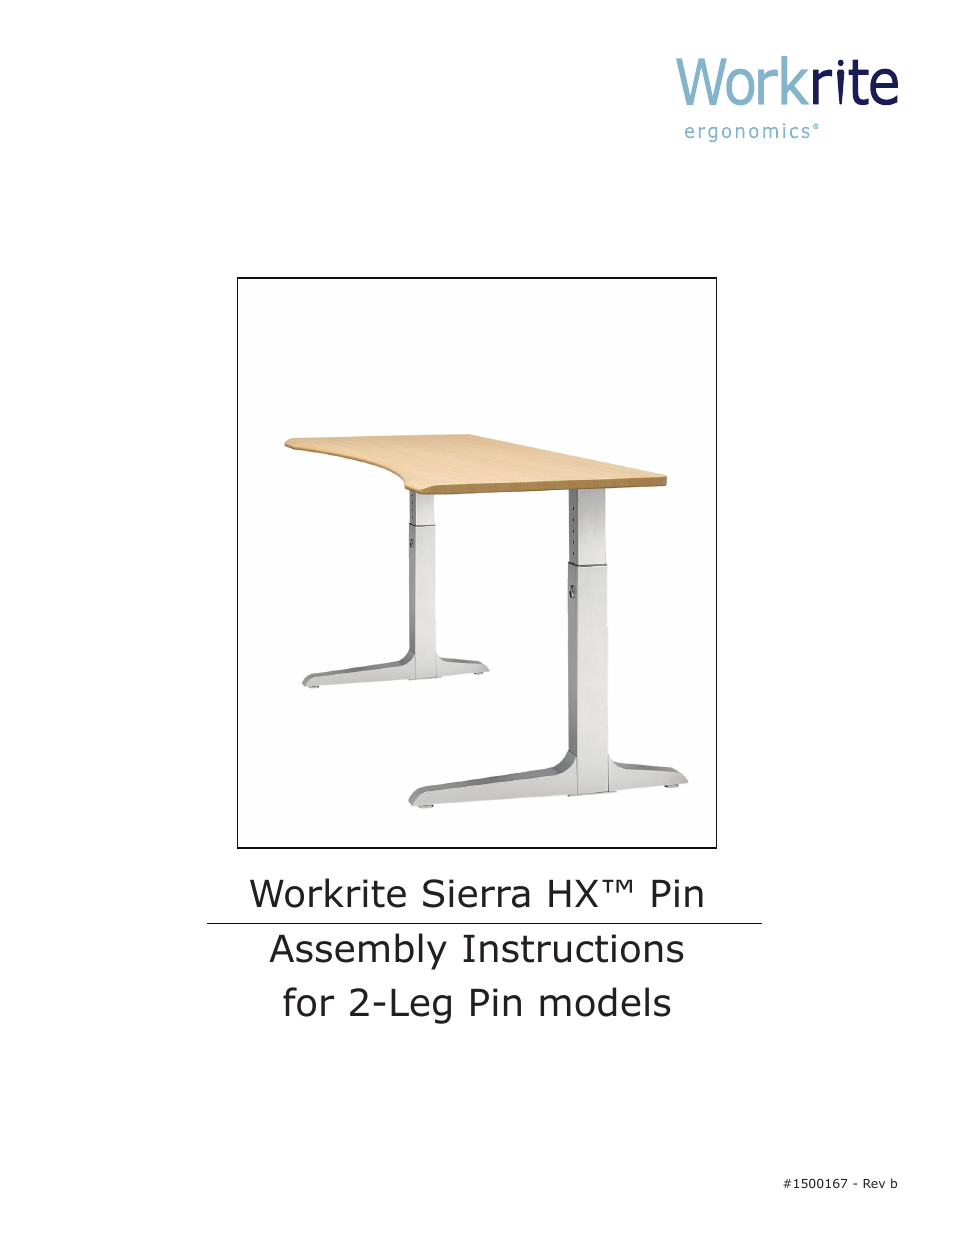 Sierra HX Pin Assembly Instructions for 2-Leg Pin models